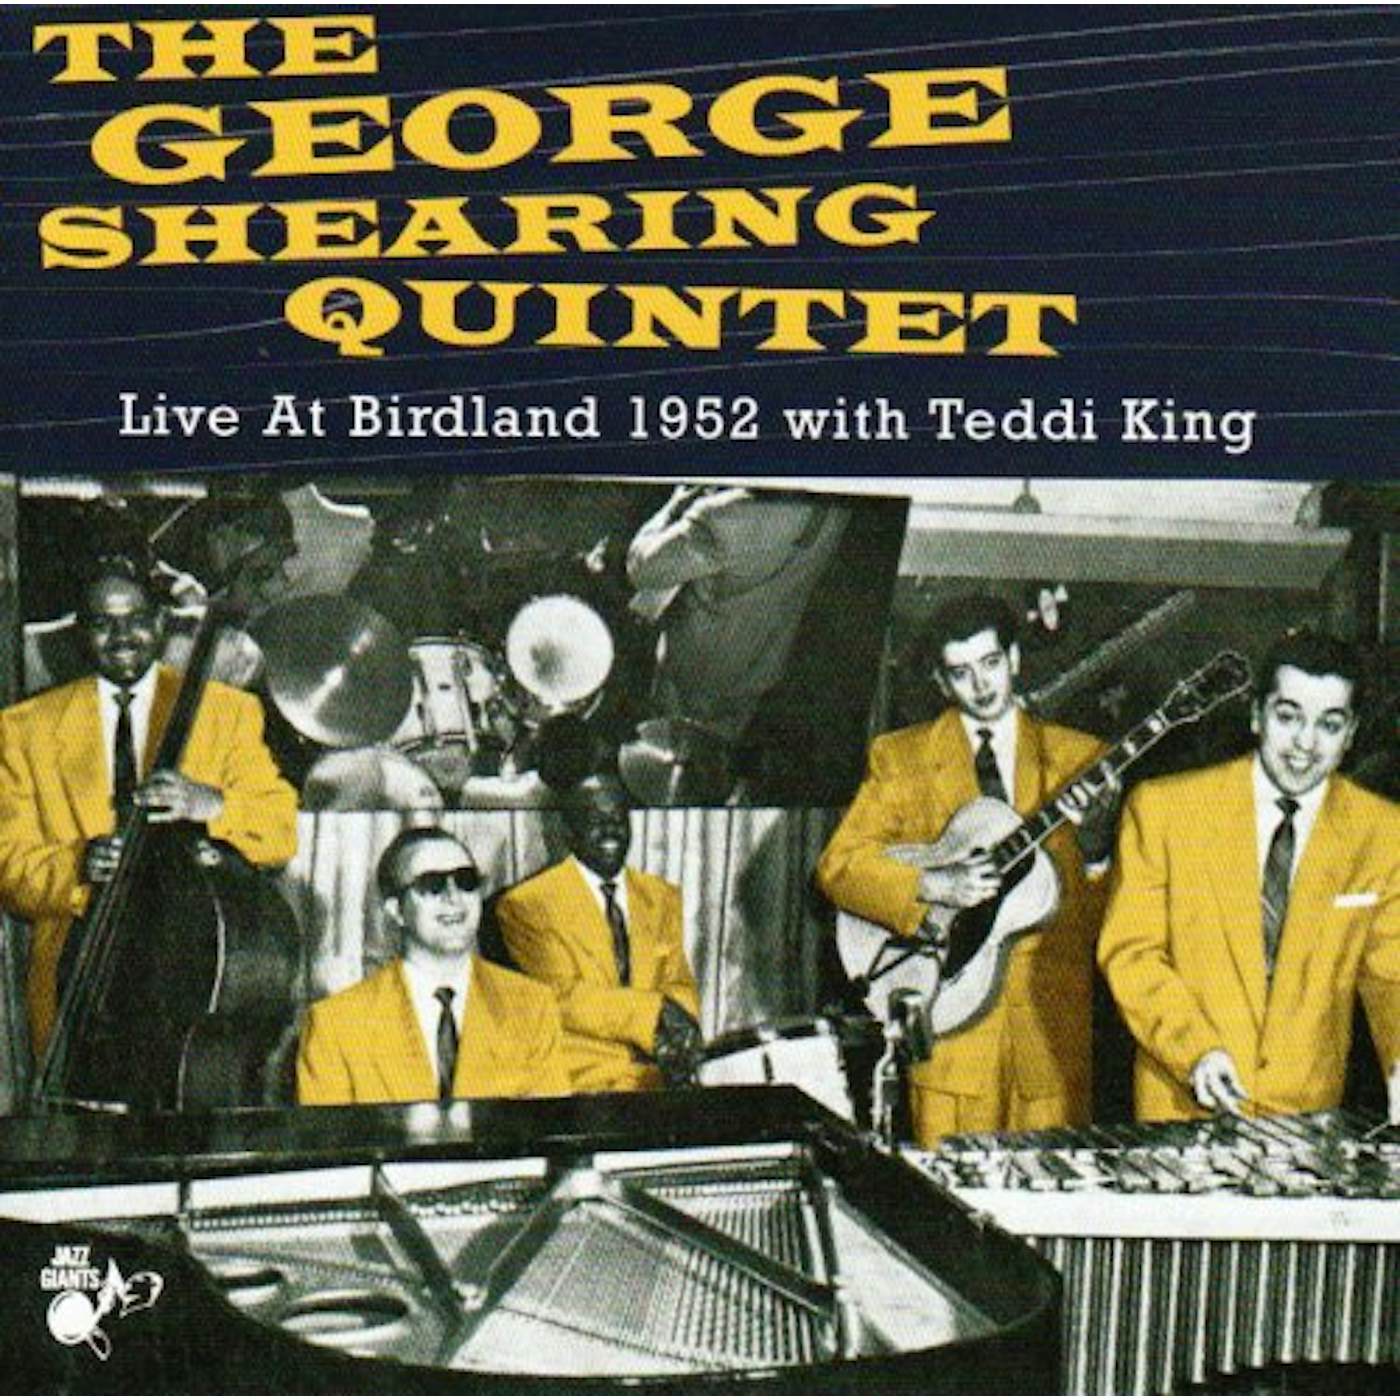 GEORGE SHEARING QUINTET LIVE AT BIRDLAND 1952 CD